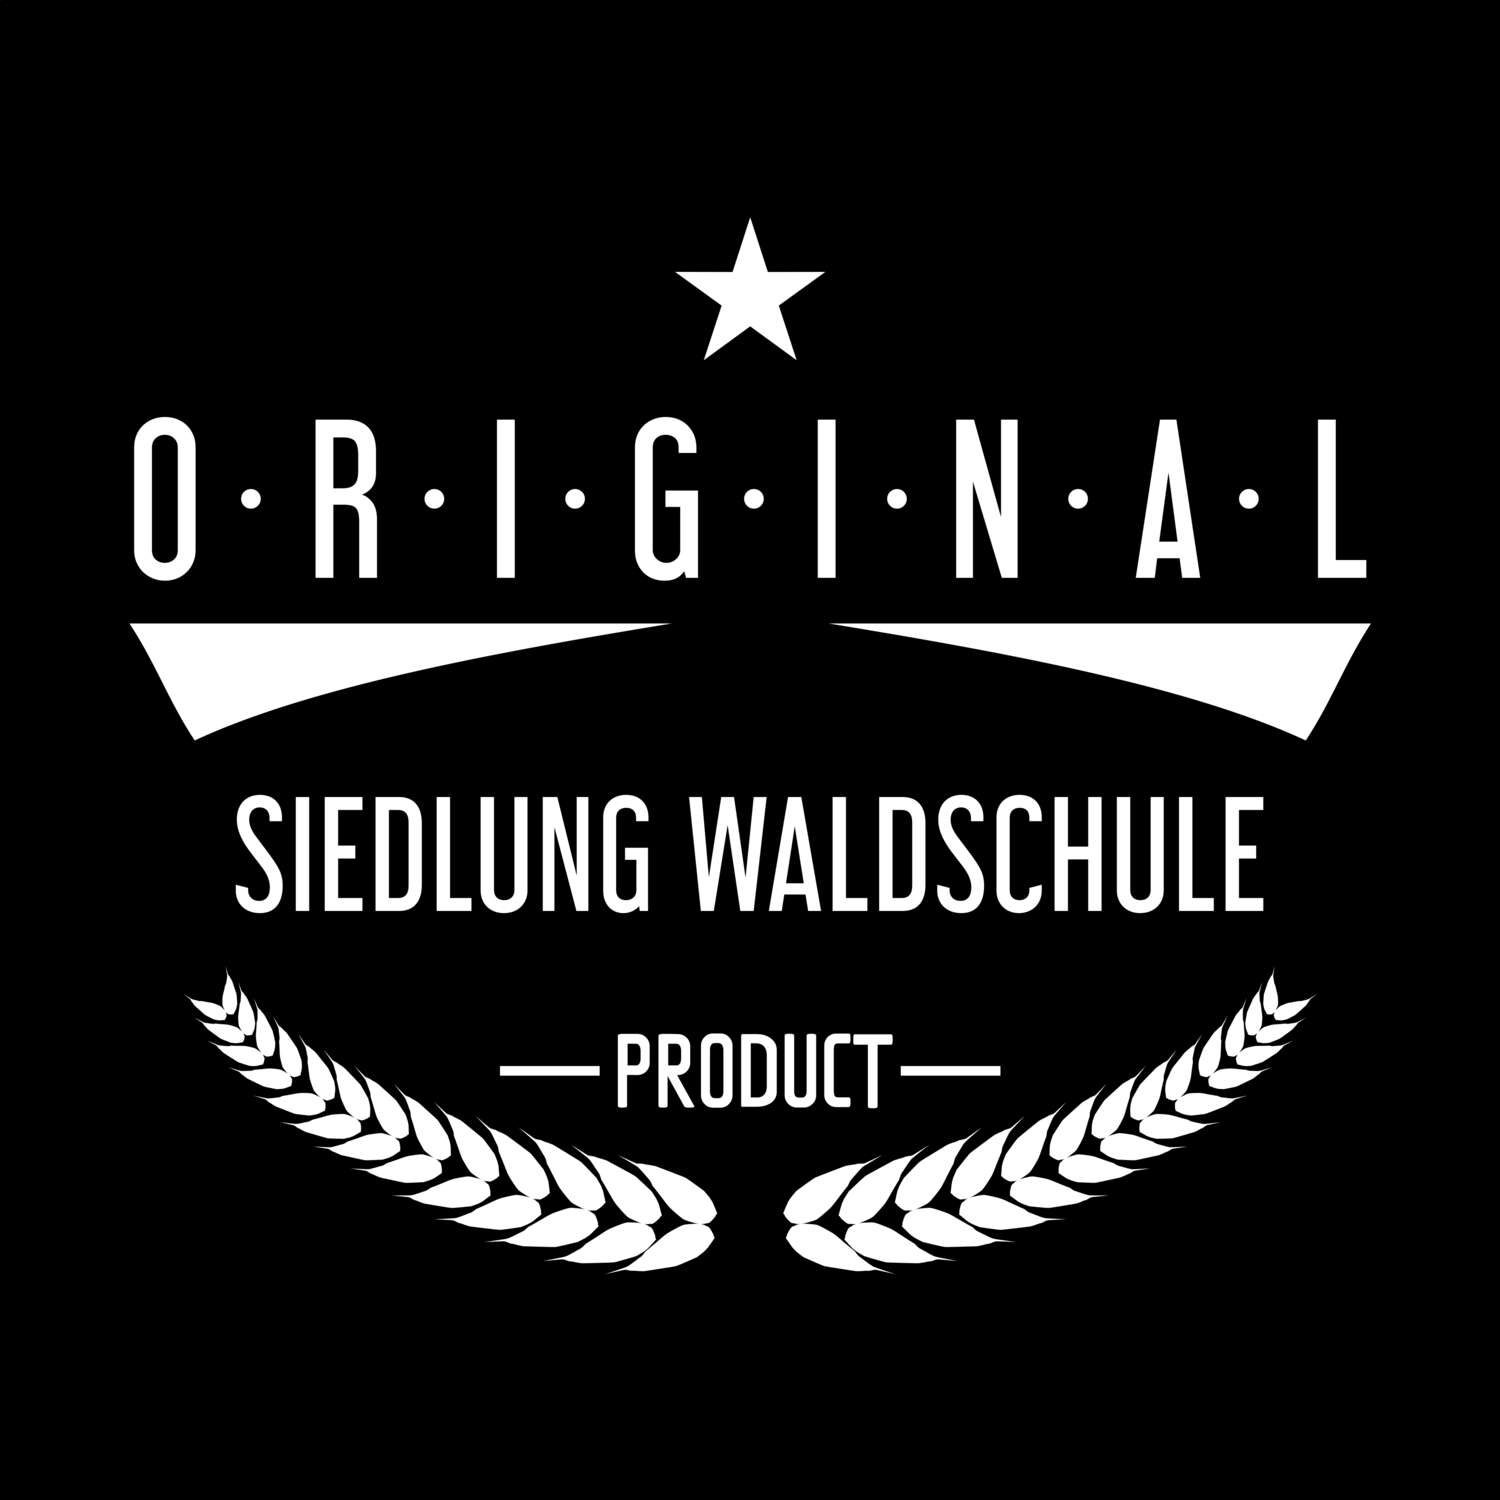 Siedlung Waldschule T-Shirt »Original Product«